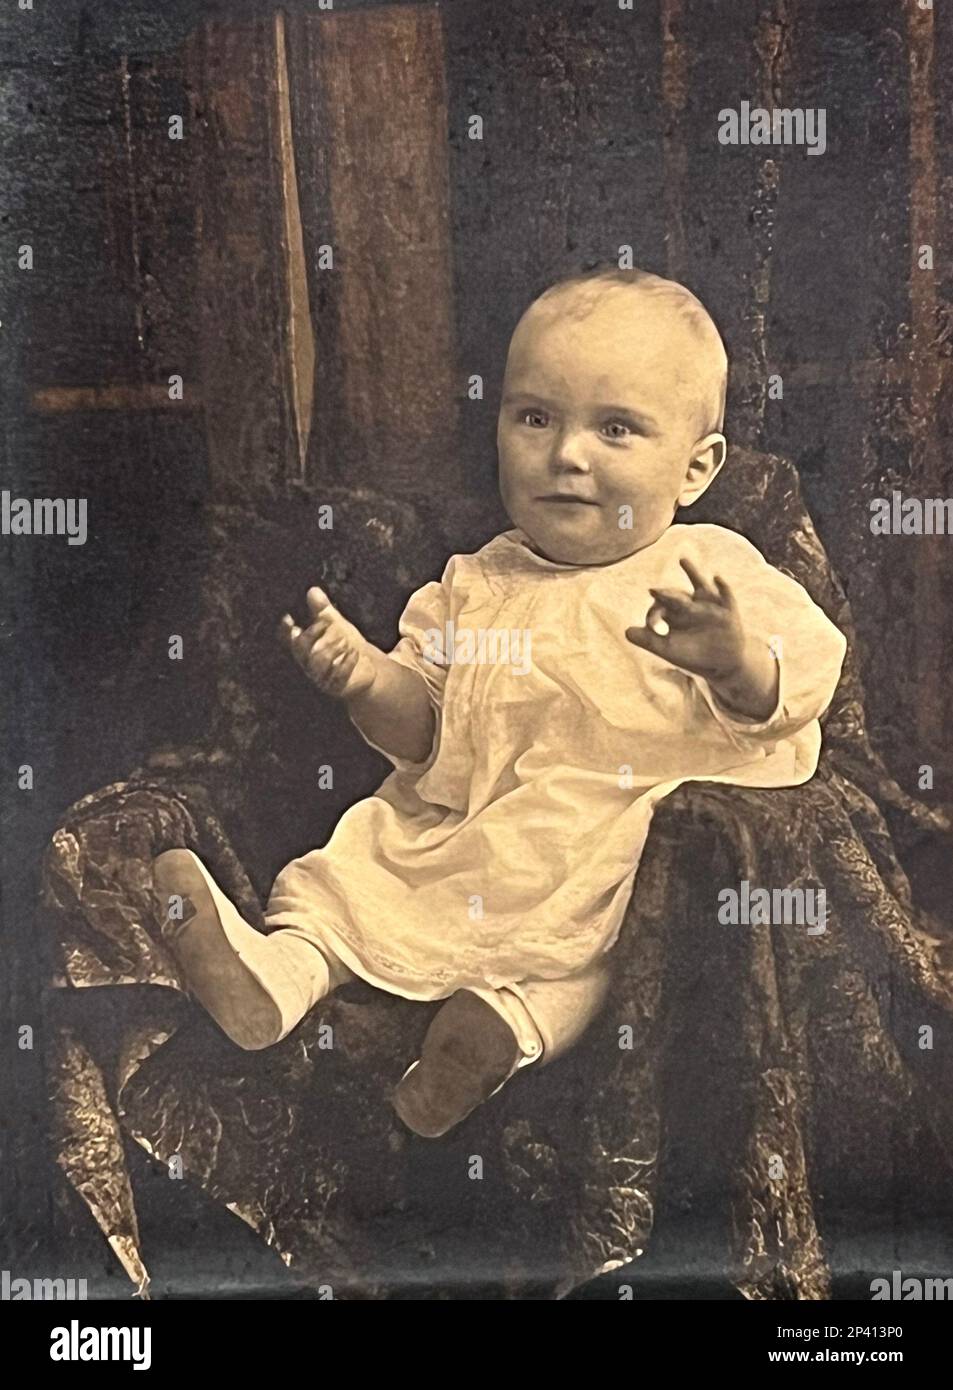 Tintyp-Fotostudio-Porträt eines Säuglings aus dem 19. Jahrhundert Stockfoto